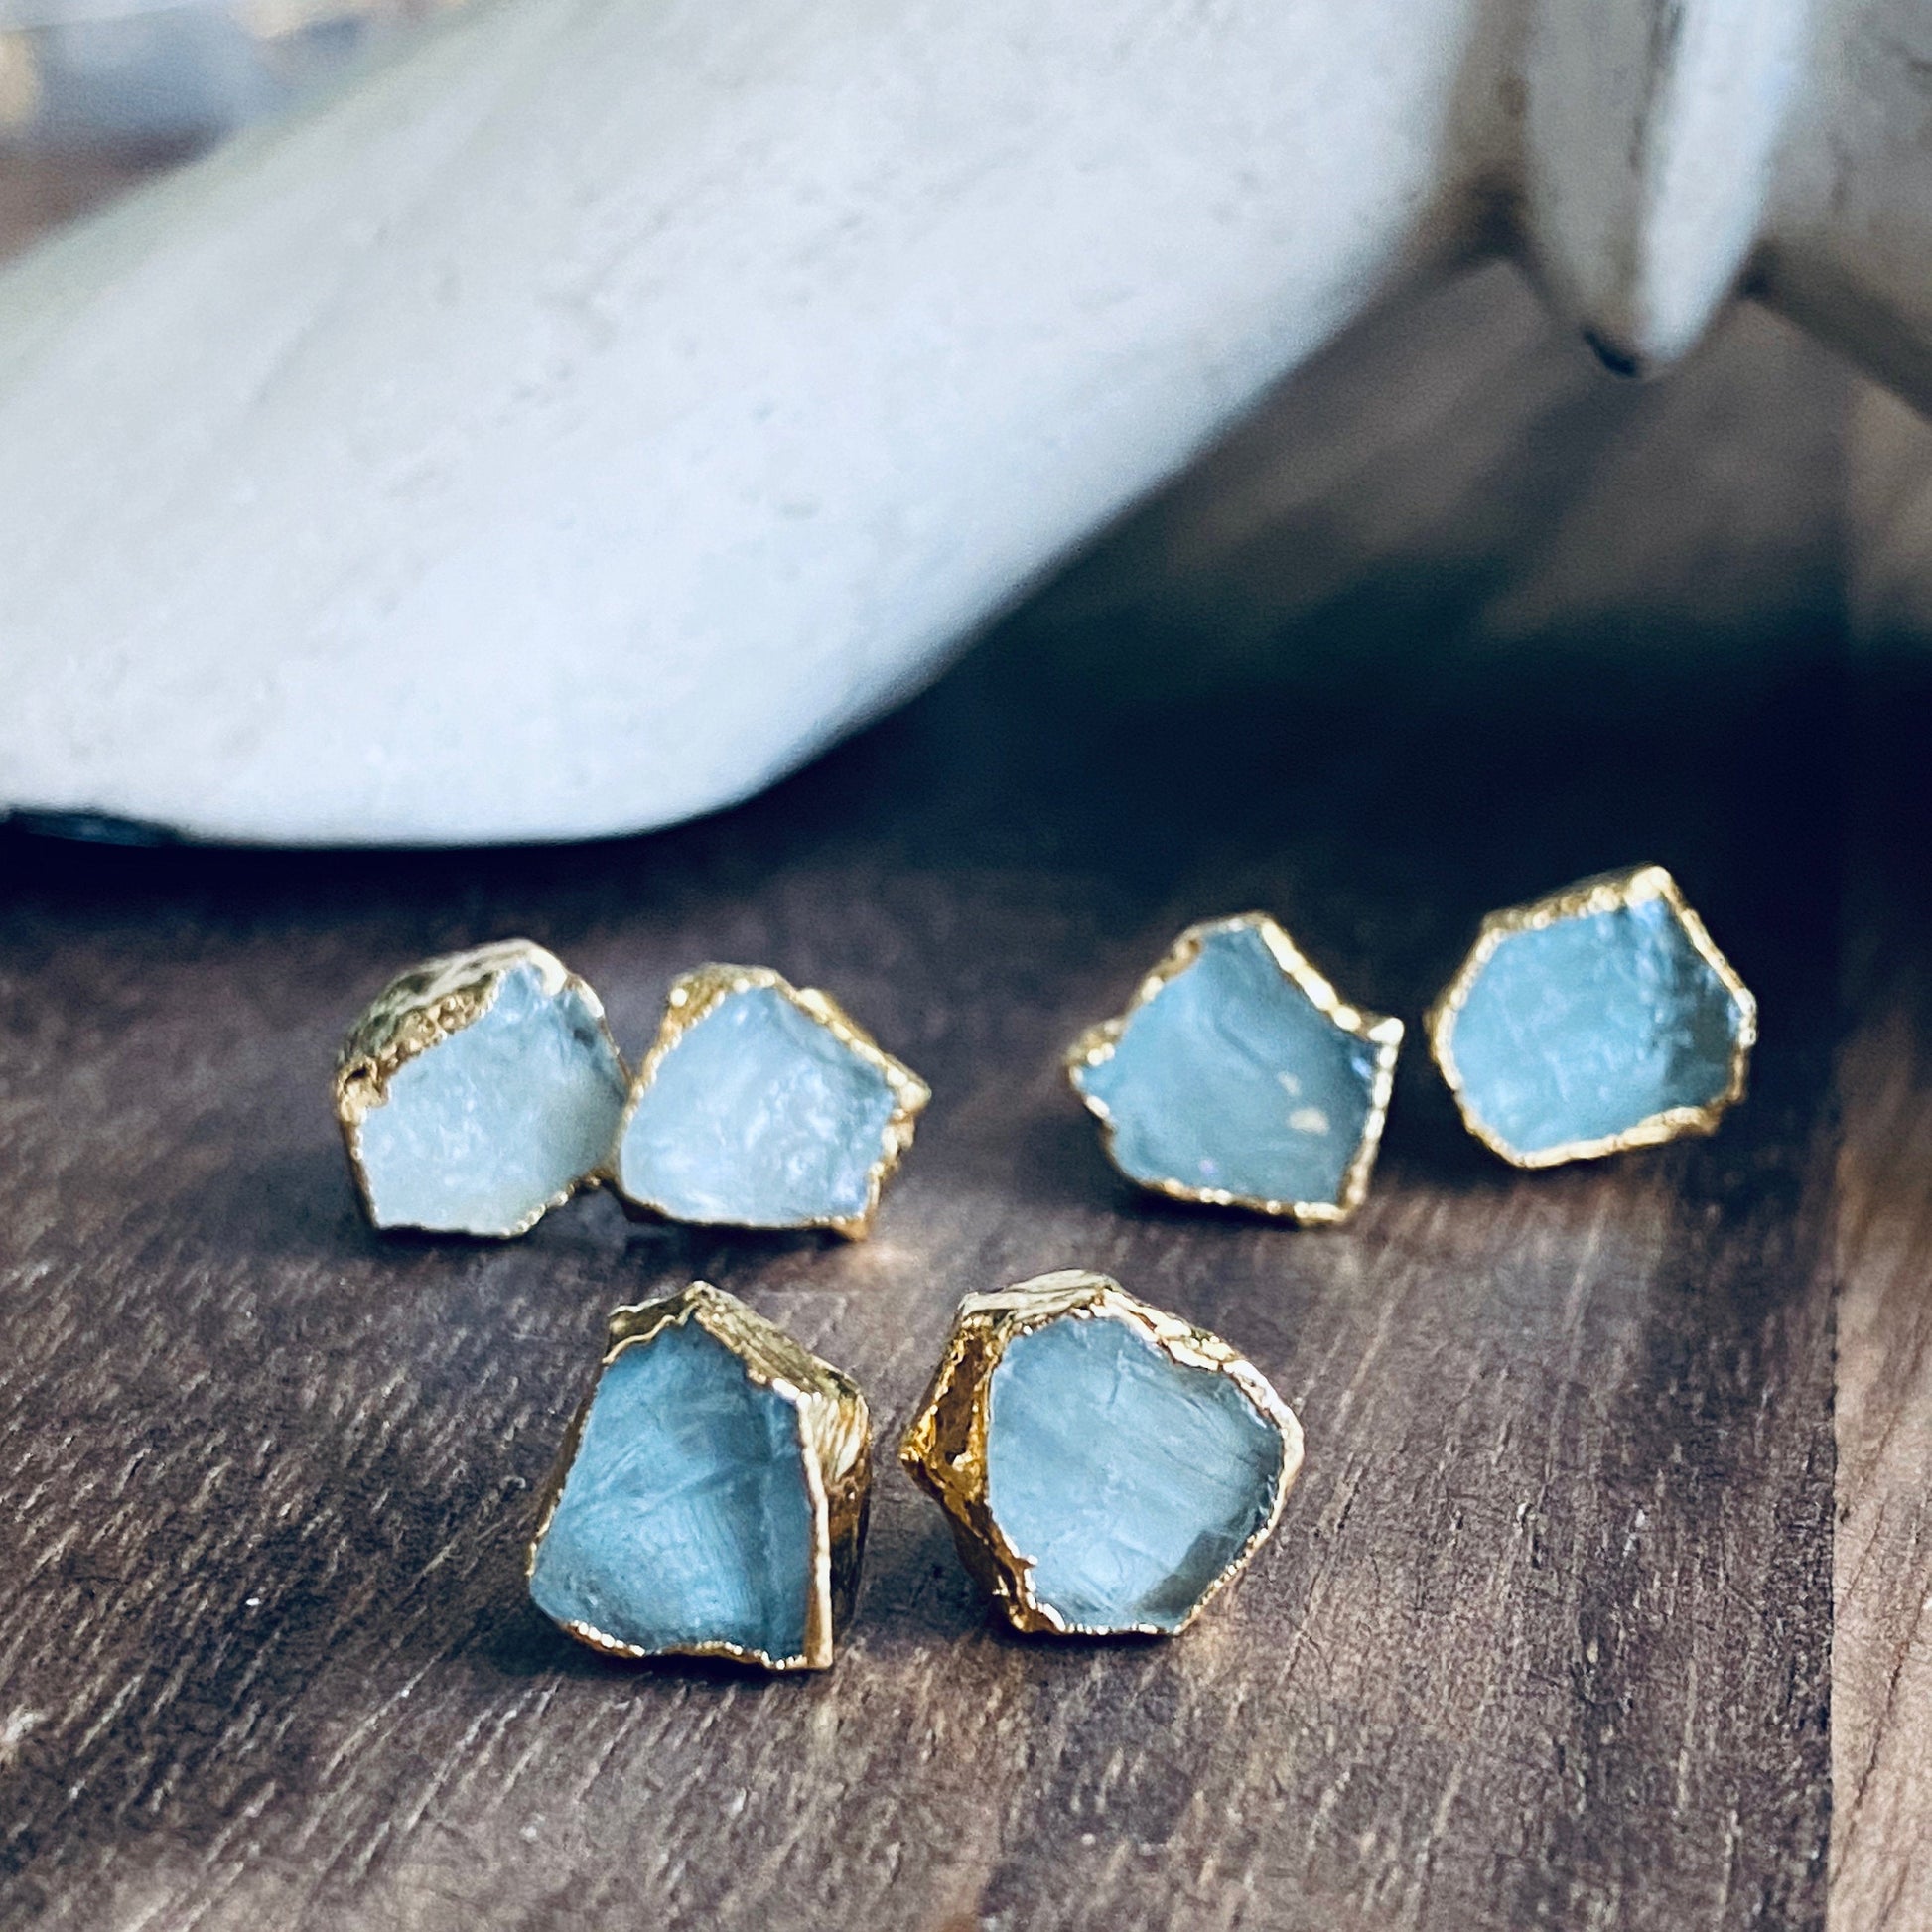 Rough aquamarine earrings